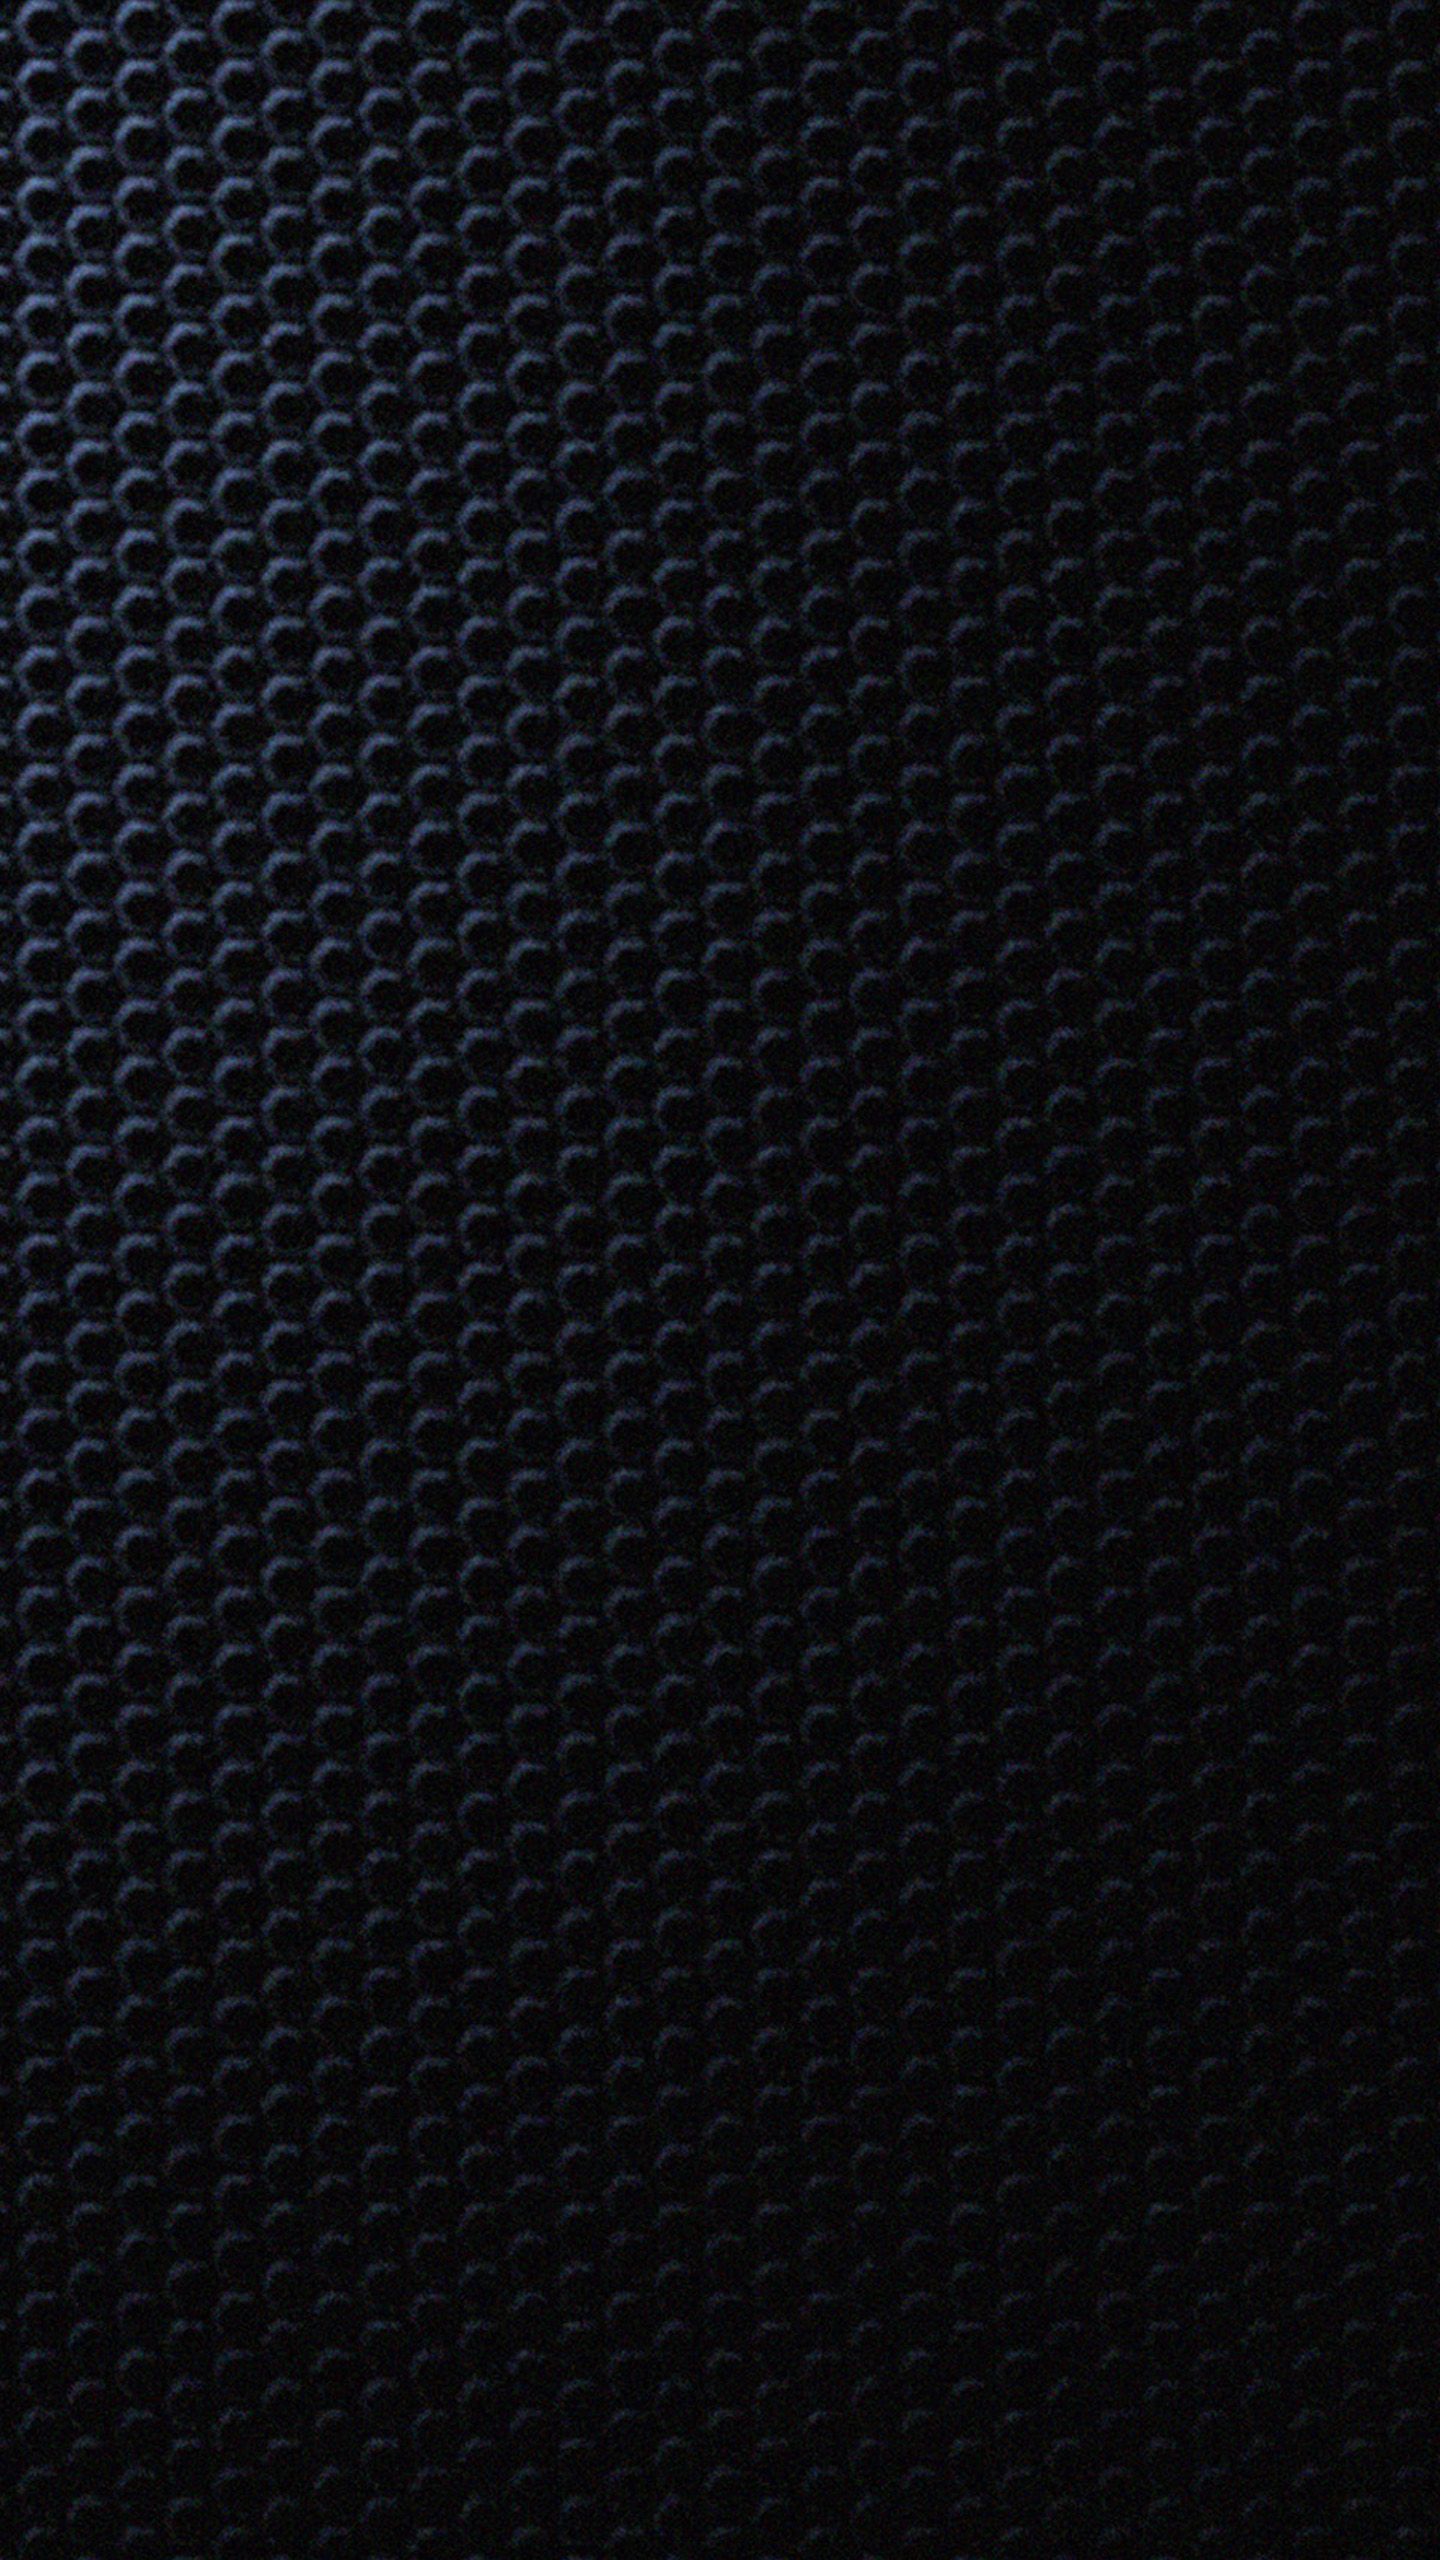  Samsung Galaxy S5 Hintergrundbild 1440x2560. Samsung Galaxy S5 Black Wallpaper